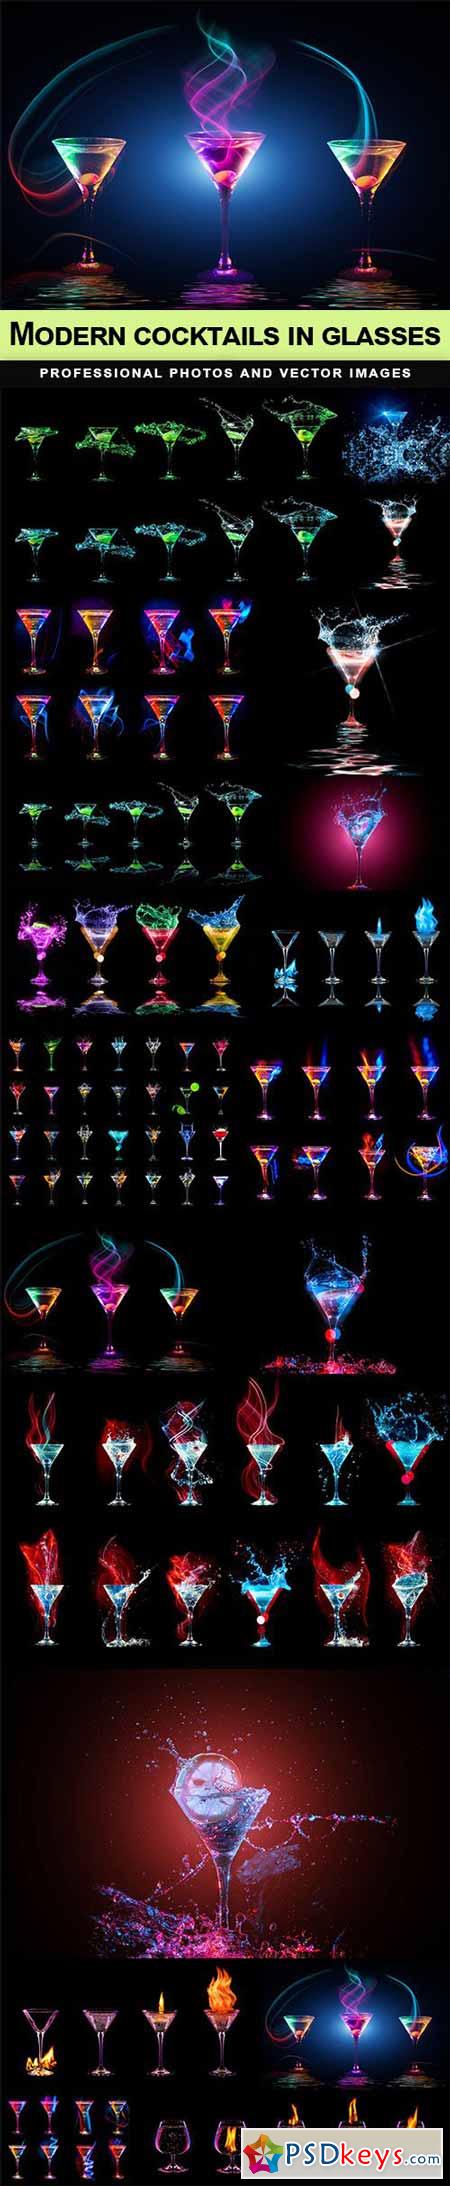 Modern cocktails in glasses - 20 UHQ JPEG